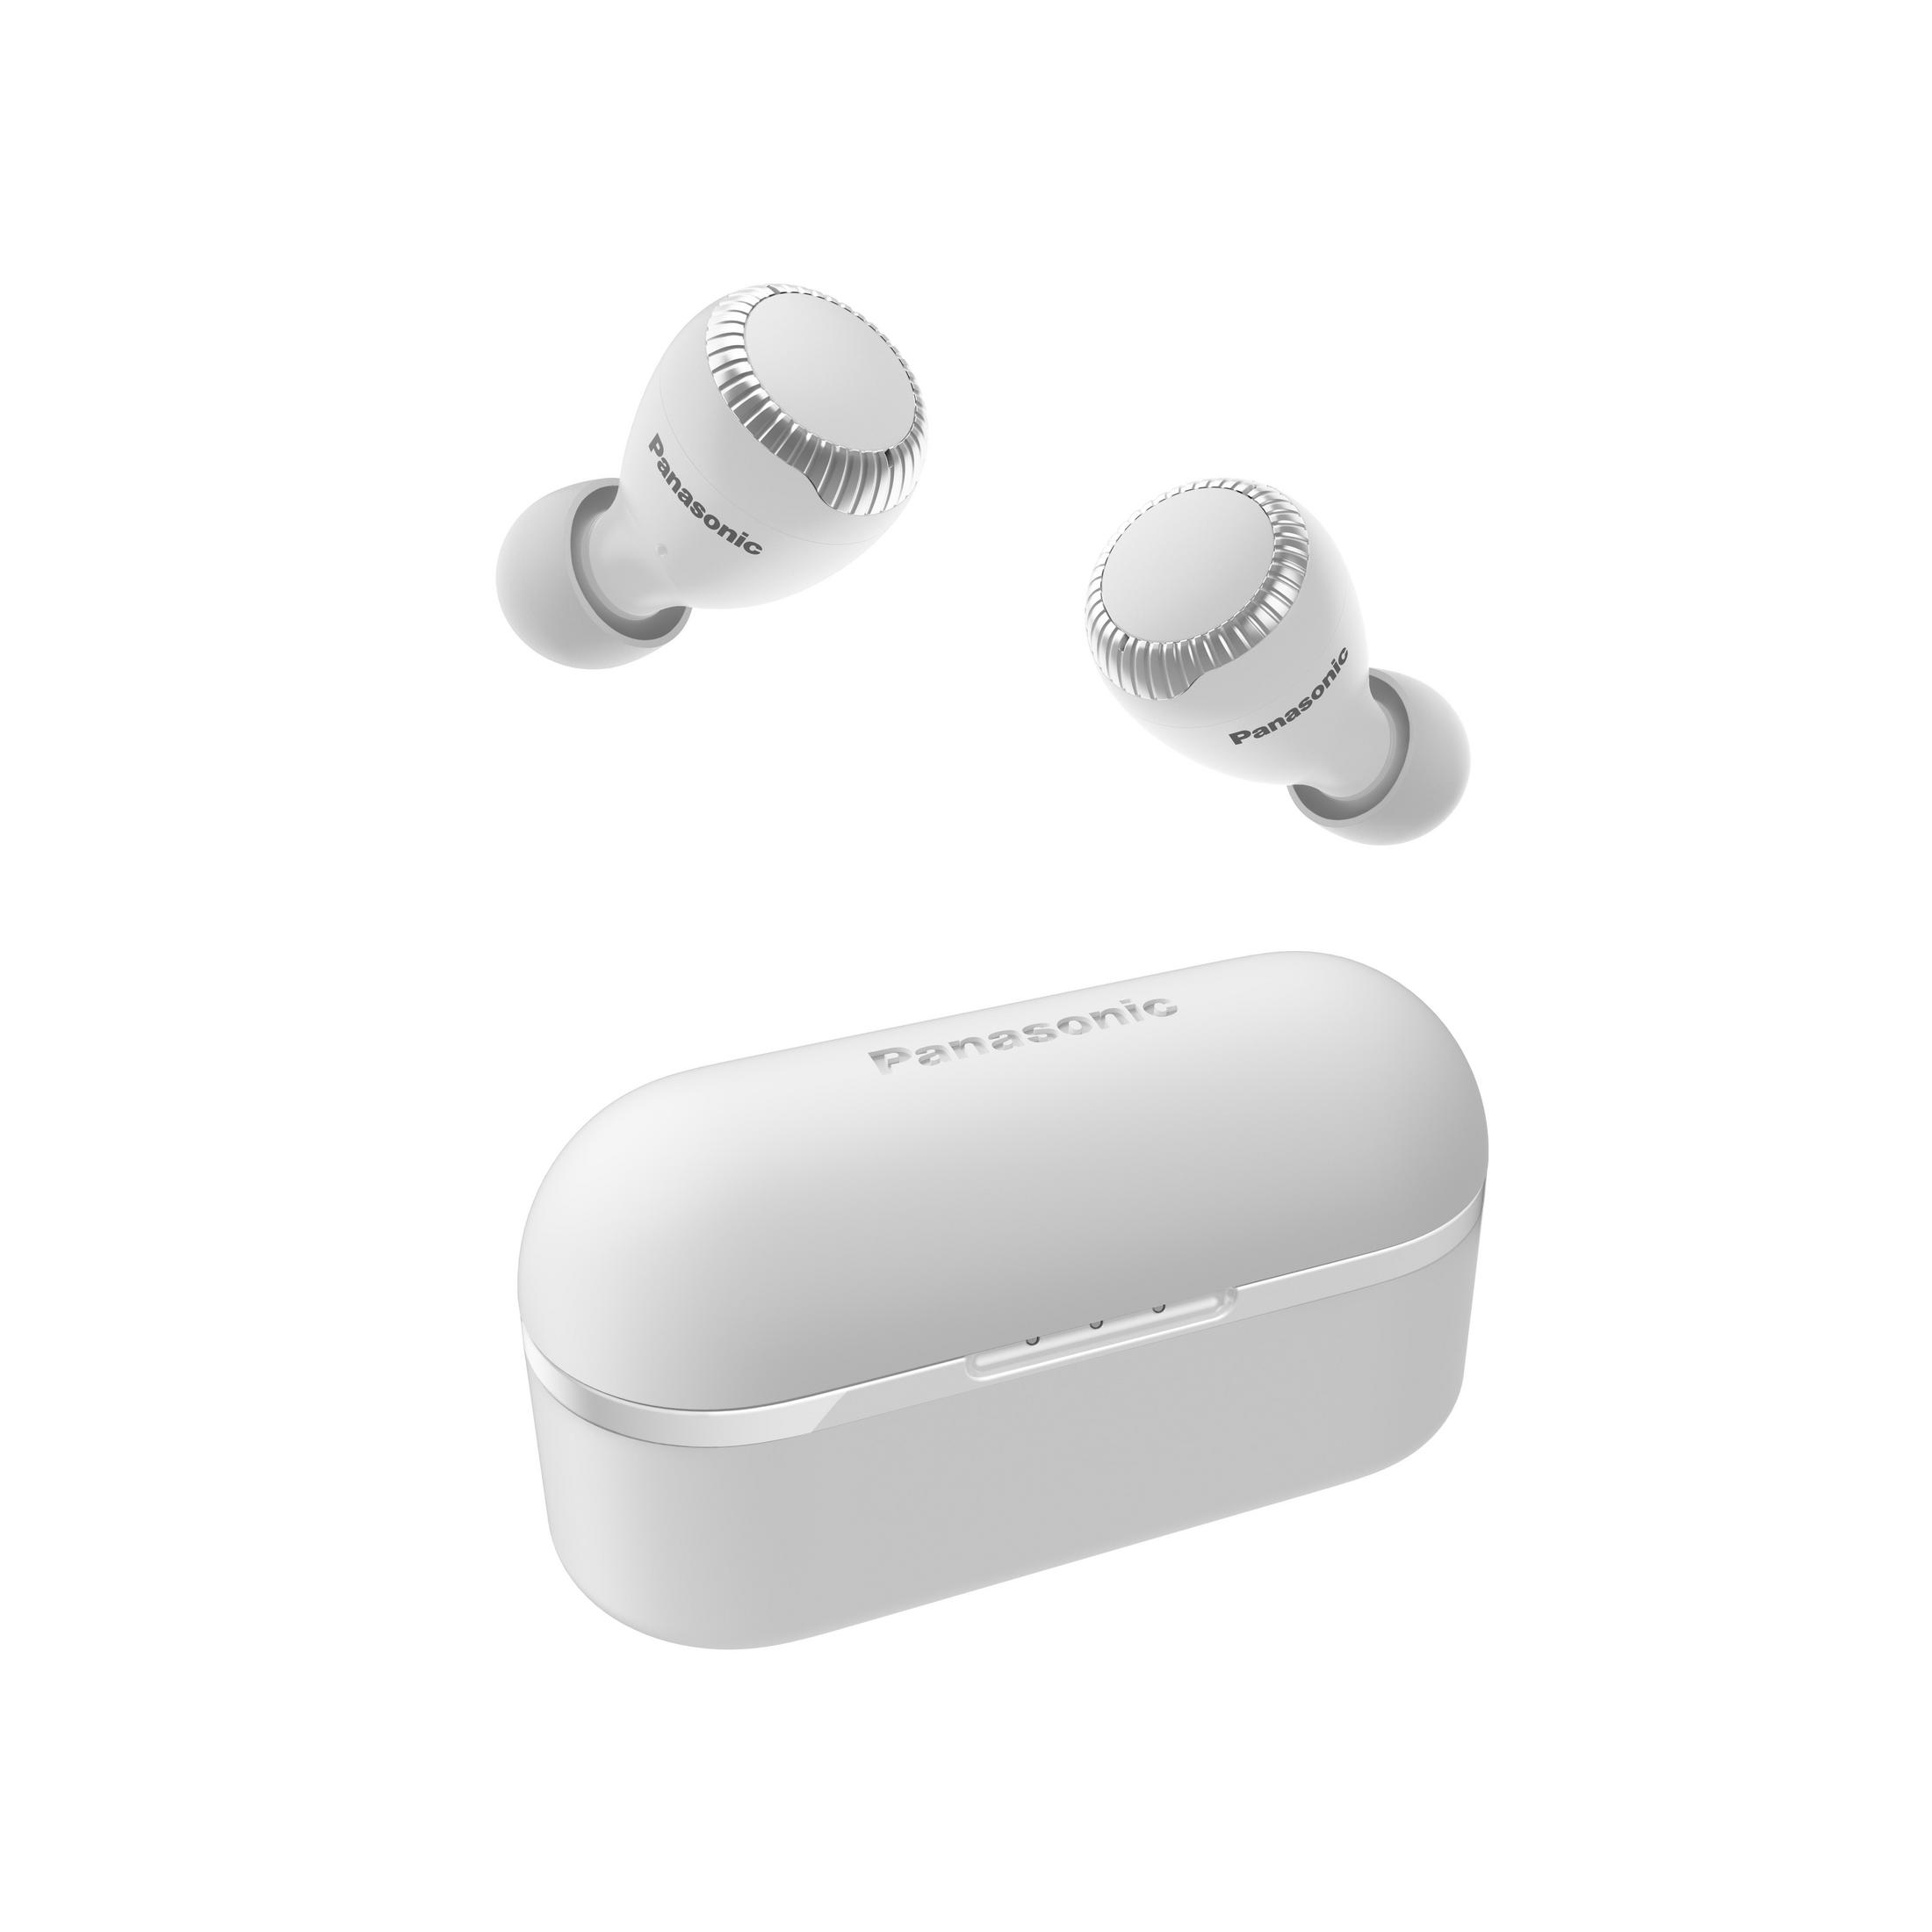 PANASONIC RZ-S 300 WE-W WEISS, In-ear Weiß Bluetooth Kopfhörer